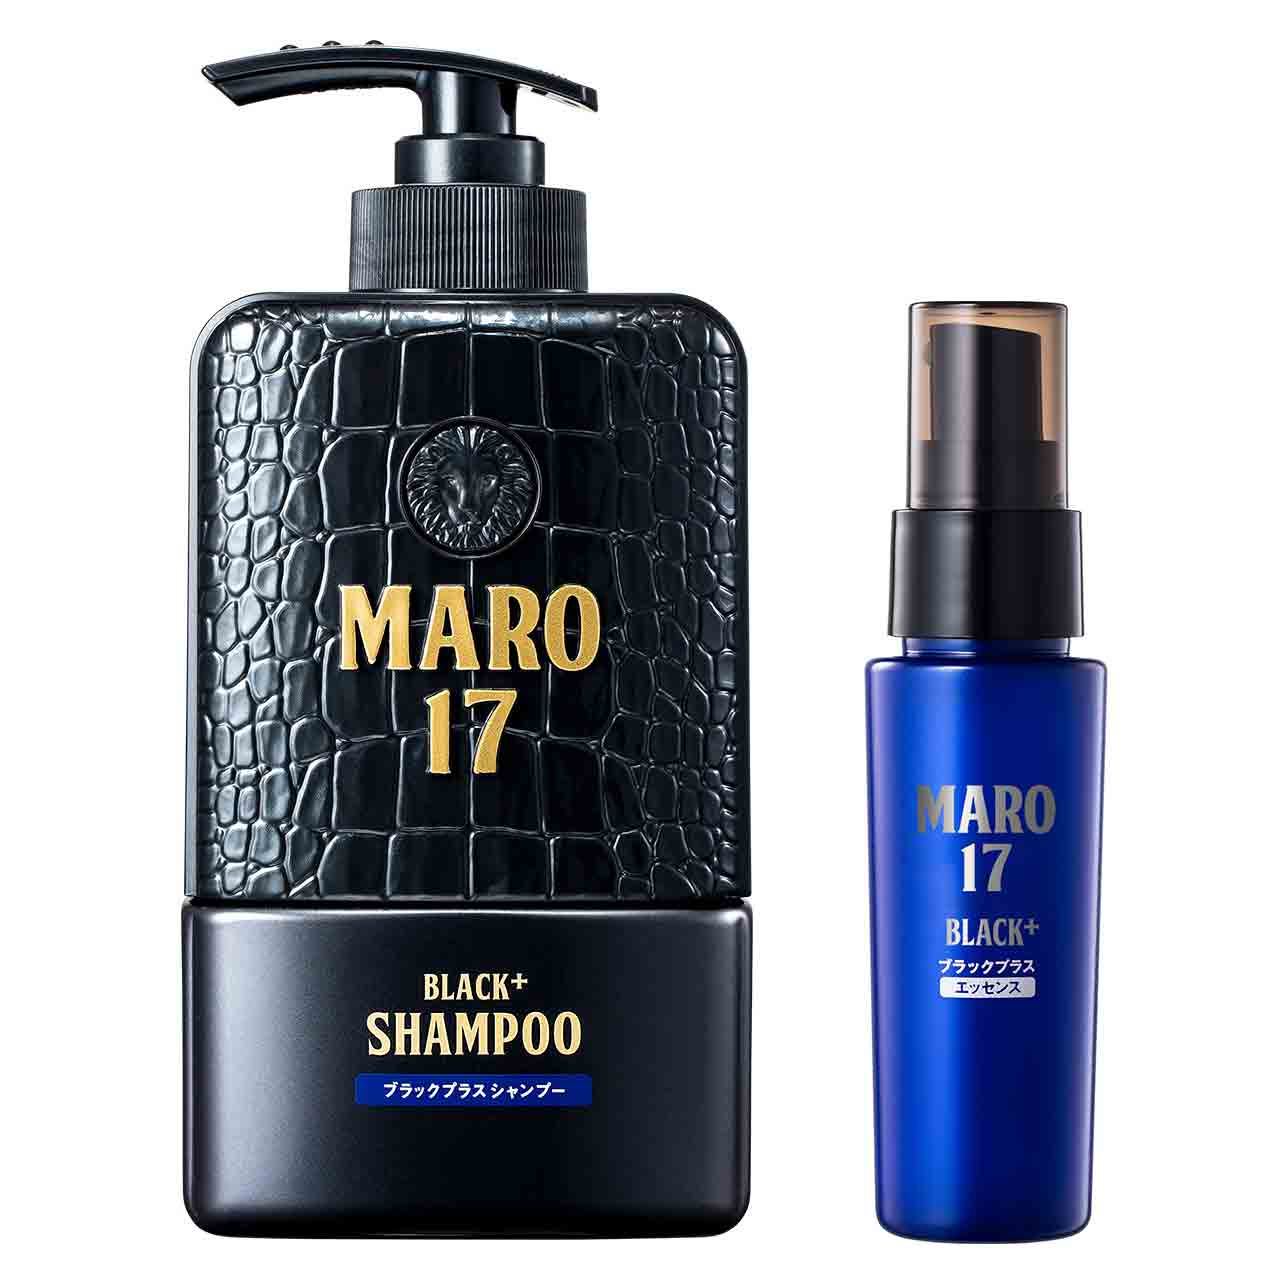 MARO17 Black+ Shampoo & Essence Set